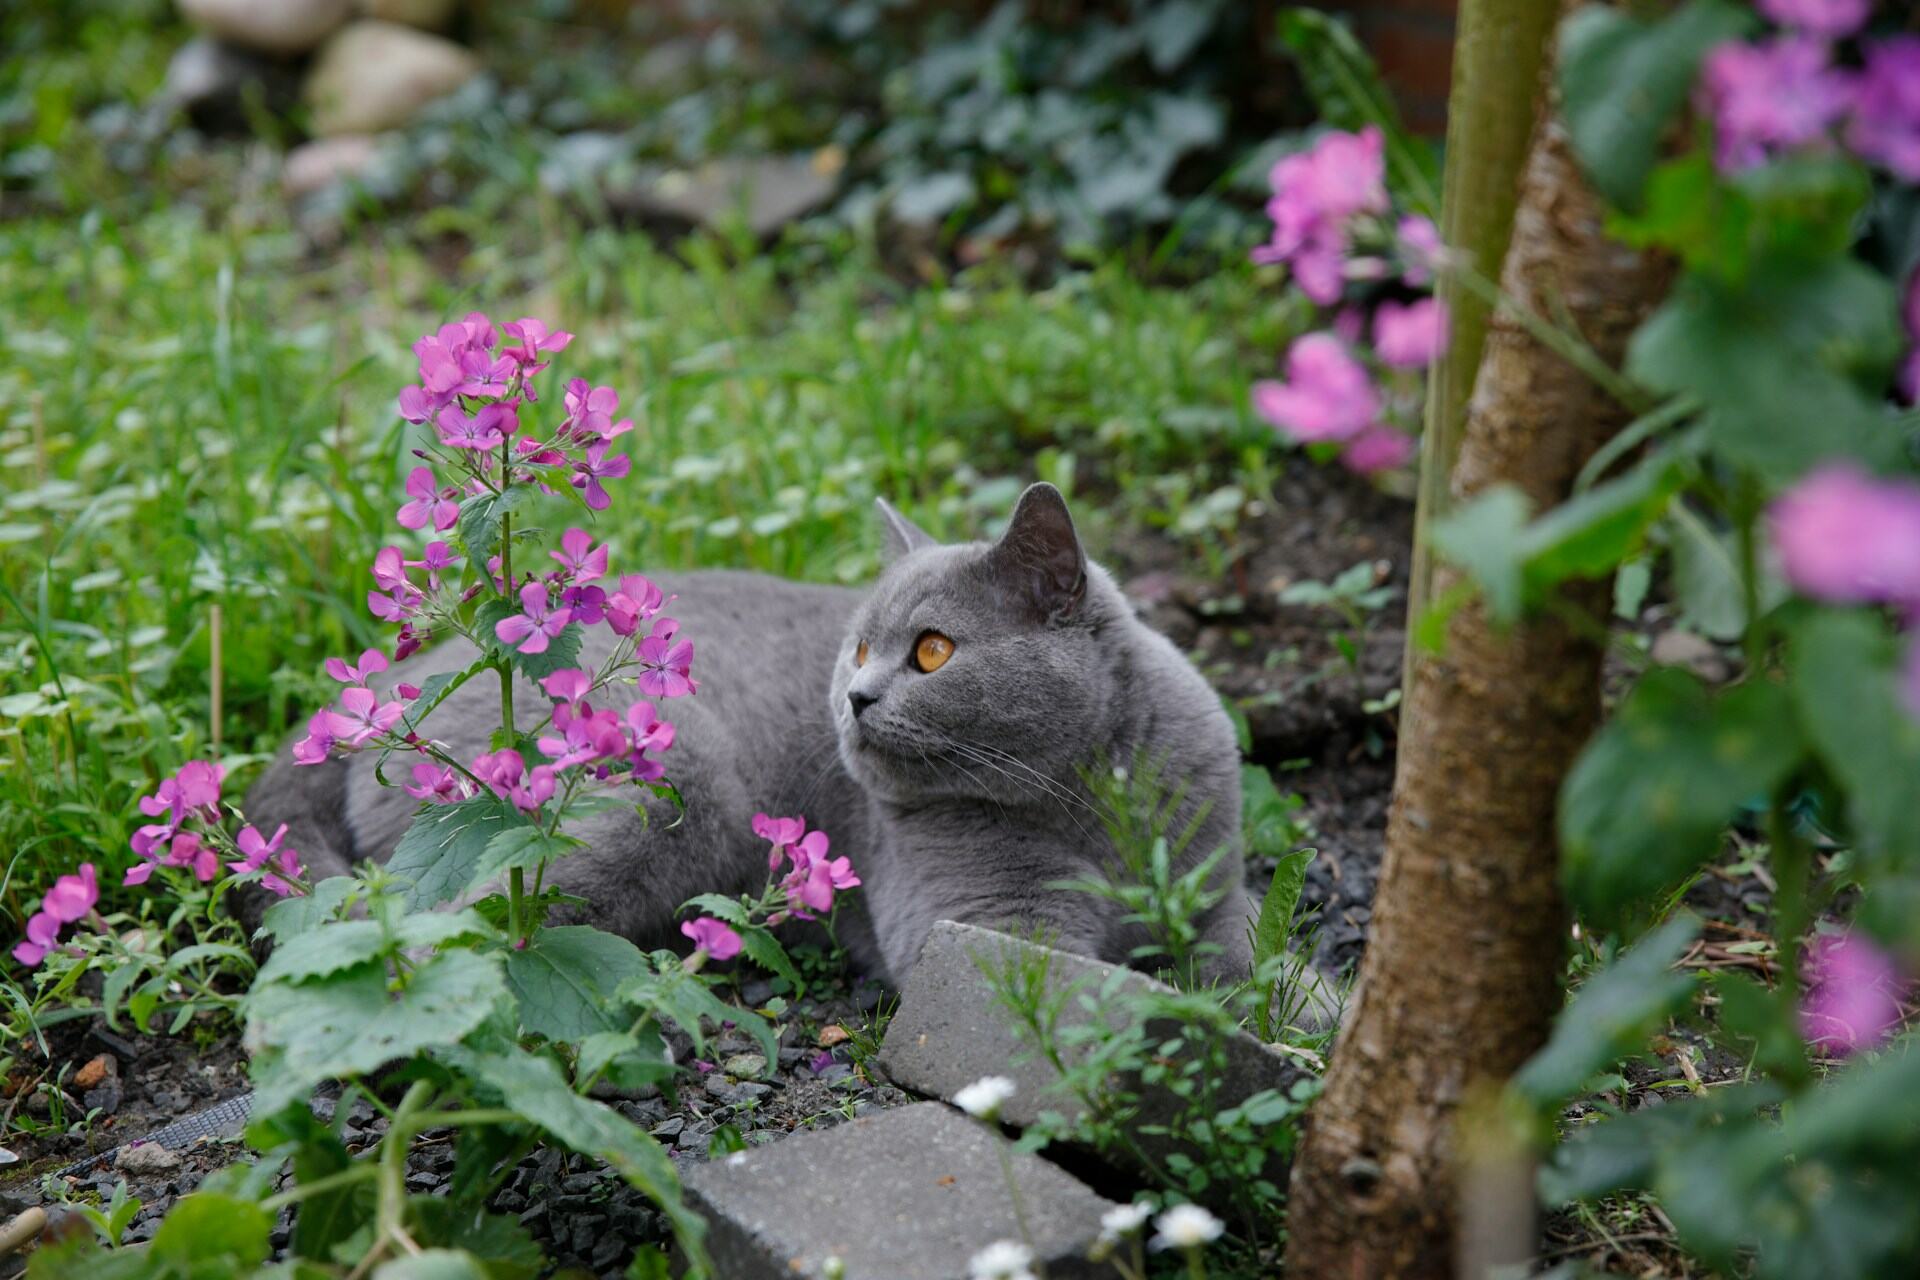 A British Shorthair cat sitting in a flowery garden patch